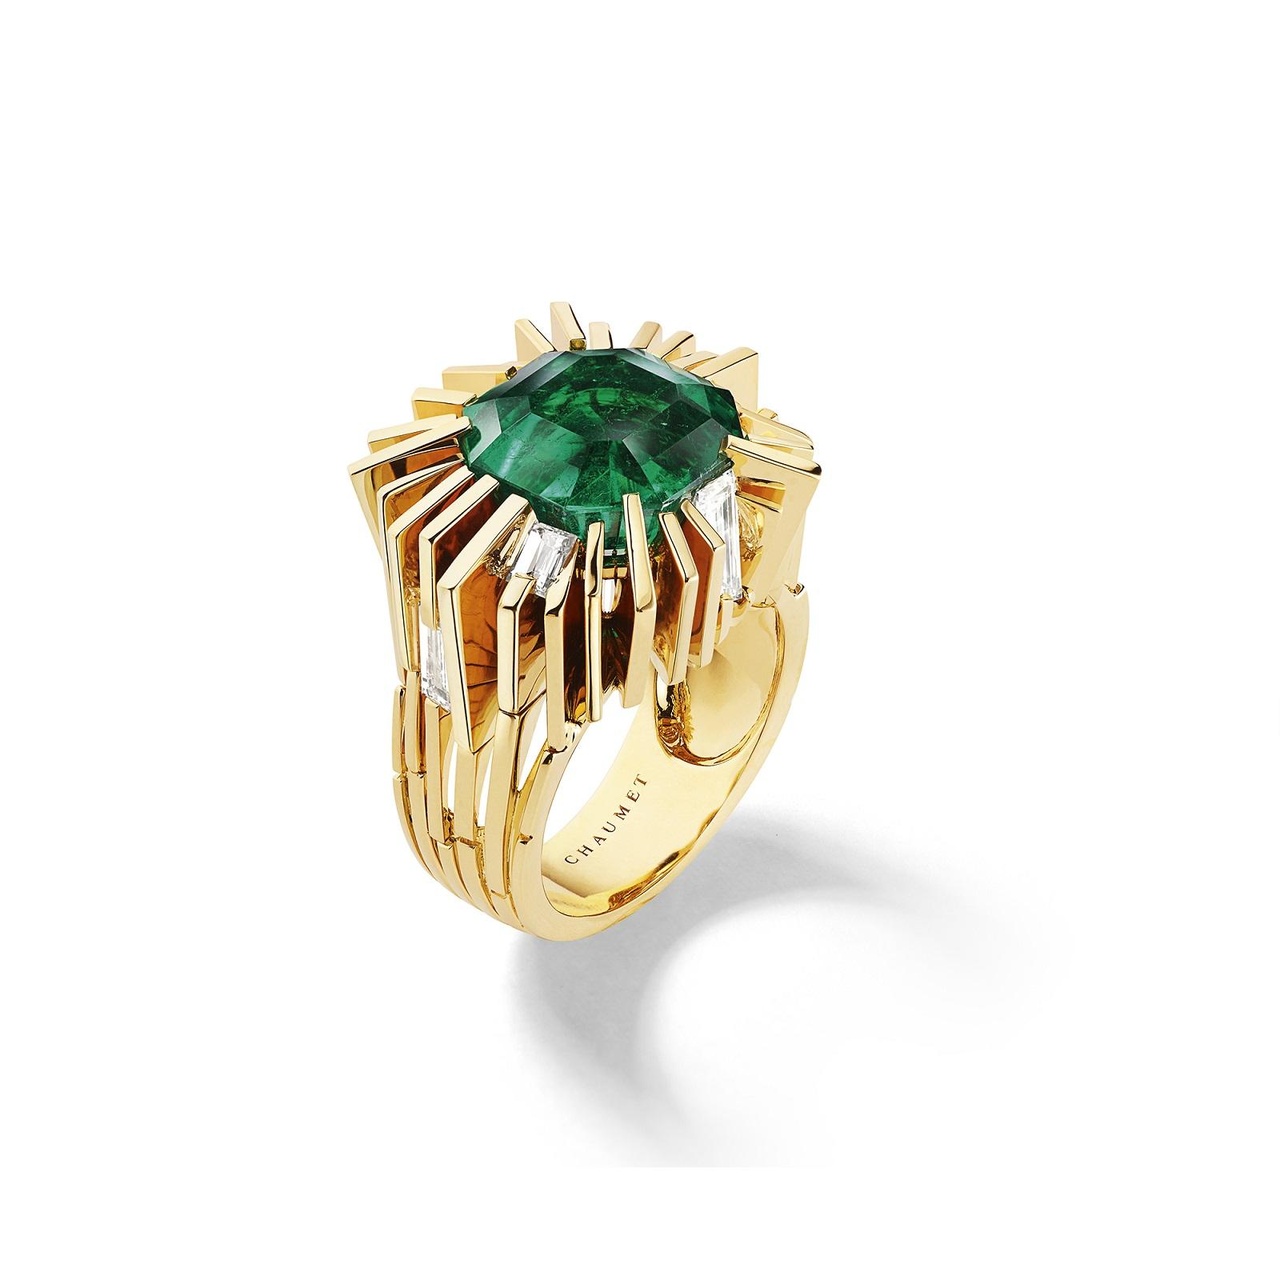 Perspectives de Chaumet - Skyline黃金戒指，鑲嵌一顆重約7.29克祖母綠形切割哥倫比亞祖母綠及長階梯形切割鑽石。